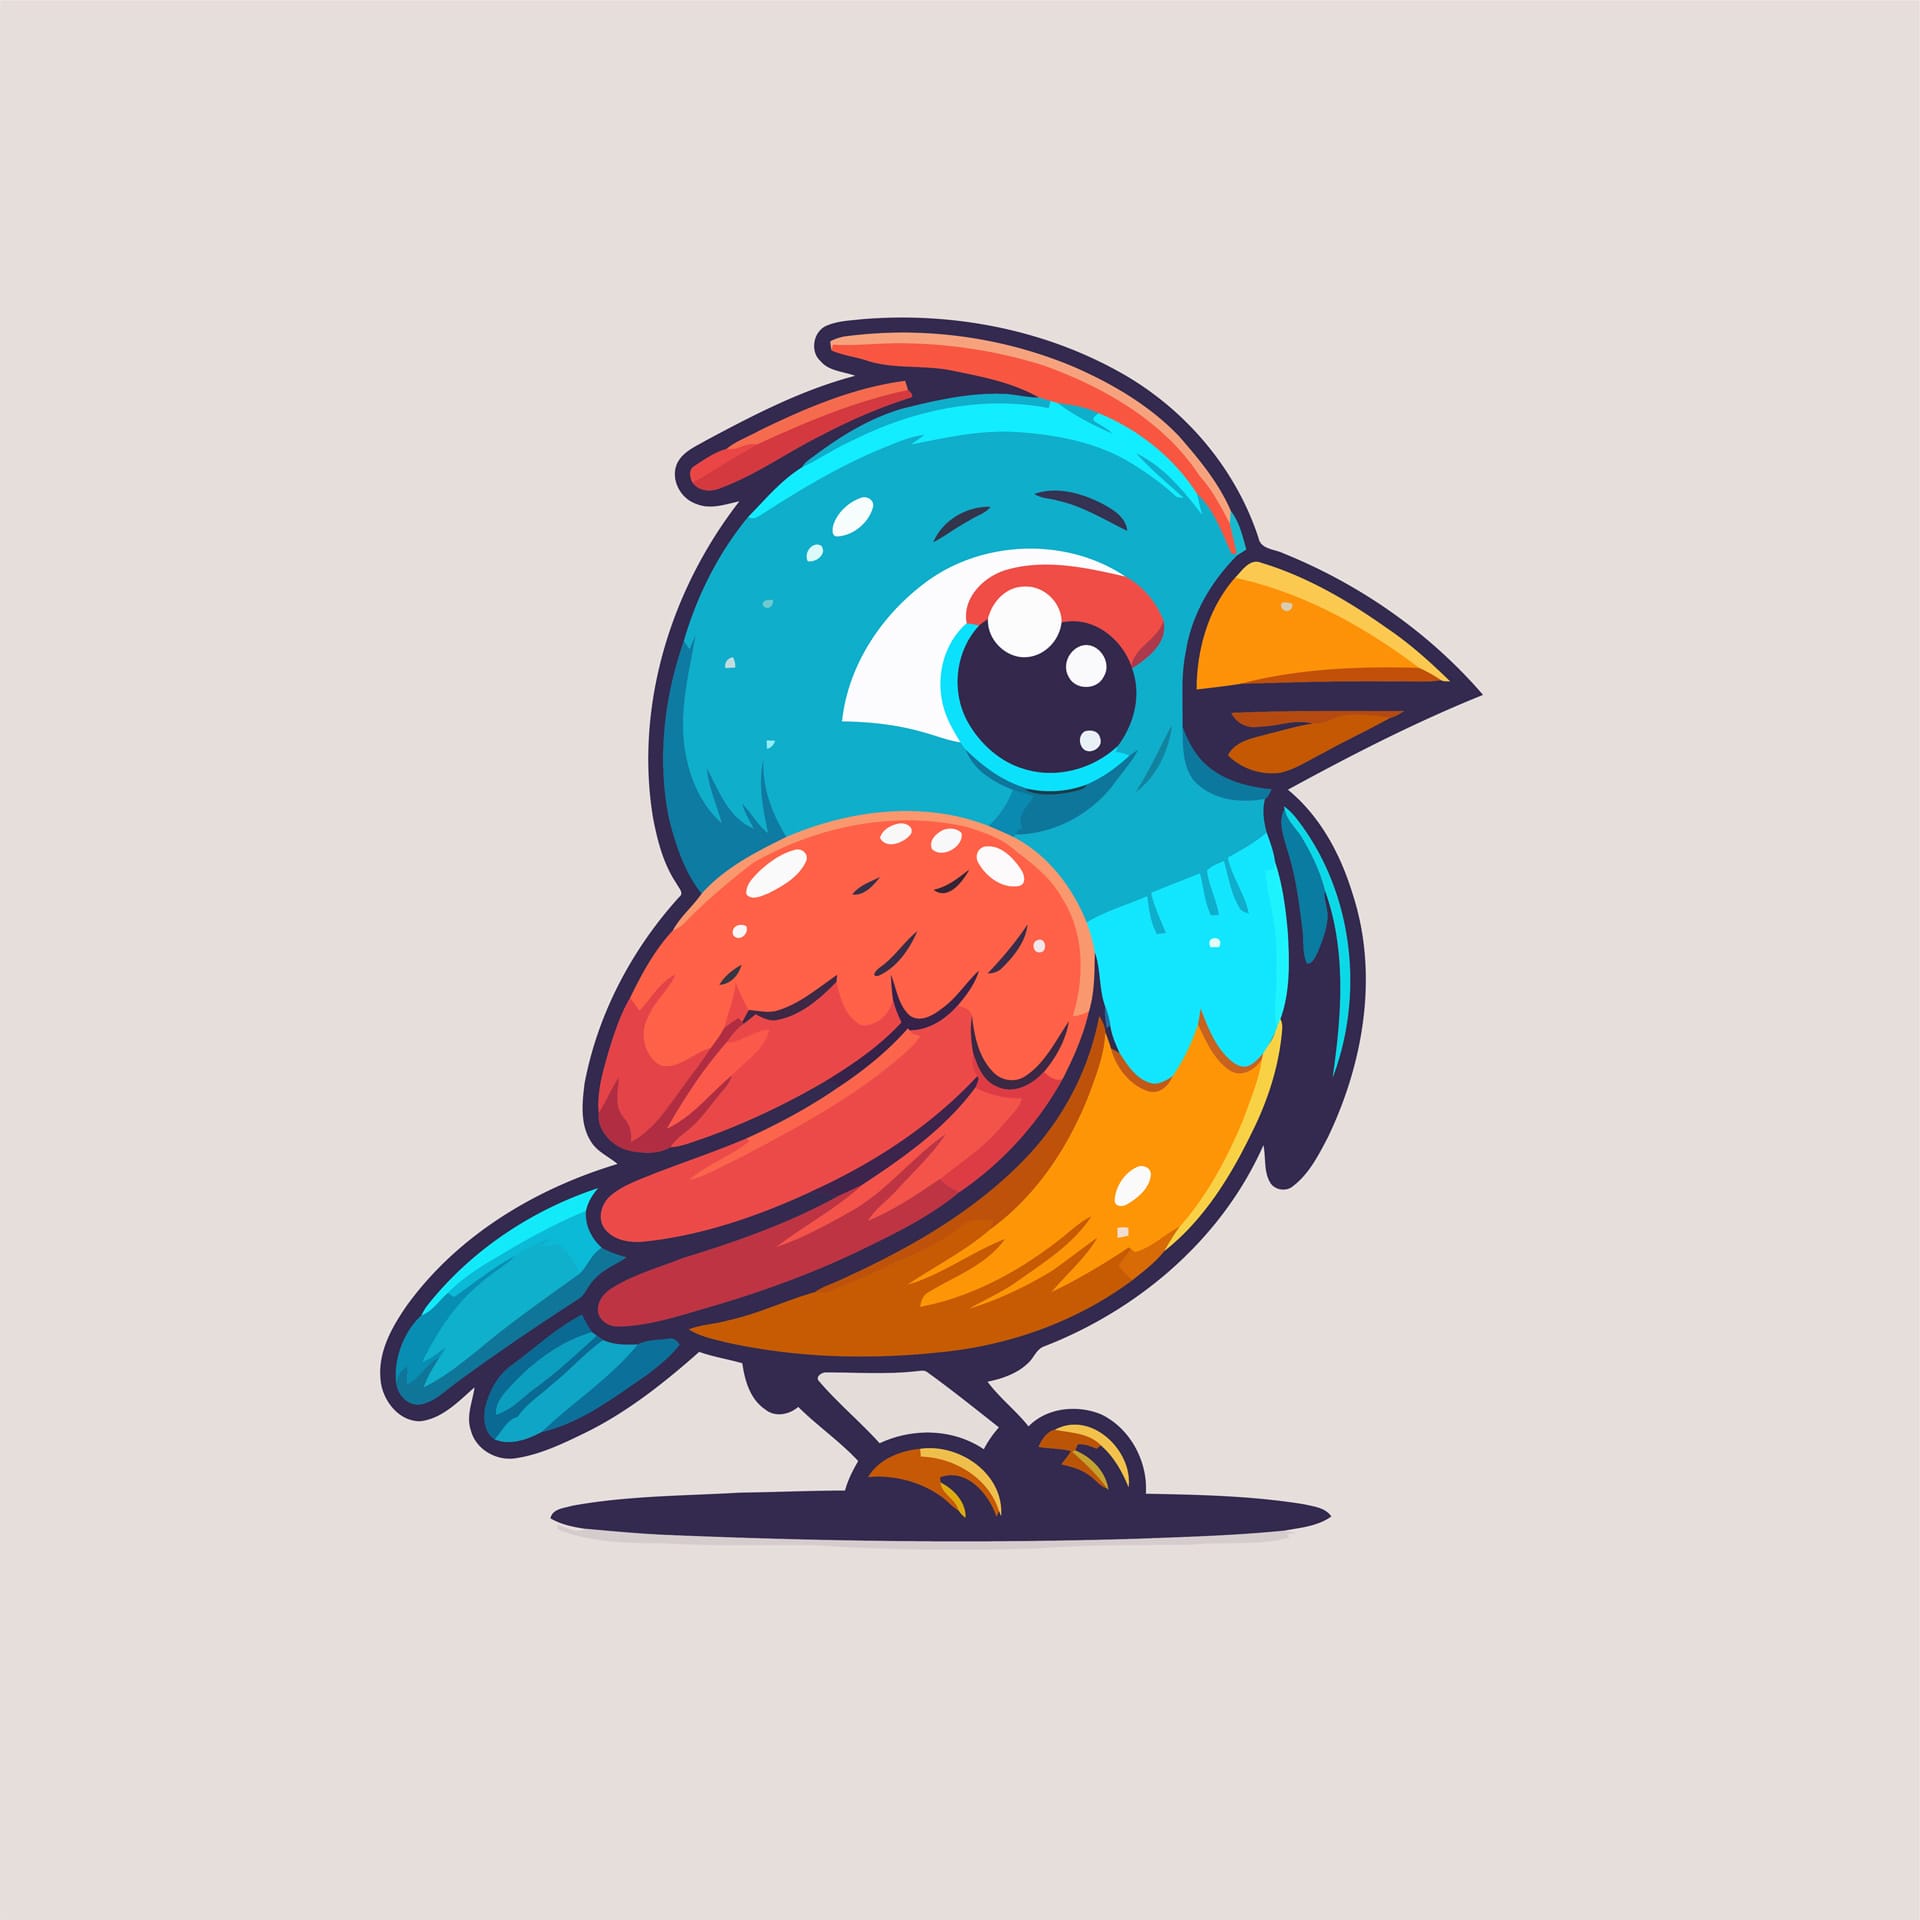 Cute little bird cartoon animal illustration logo mascot icon picture